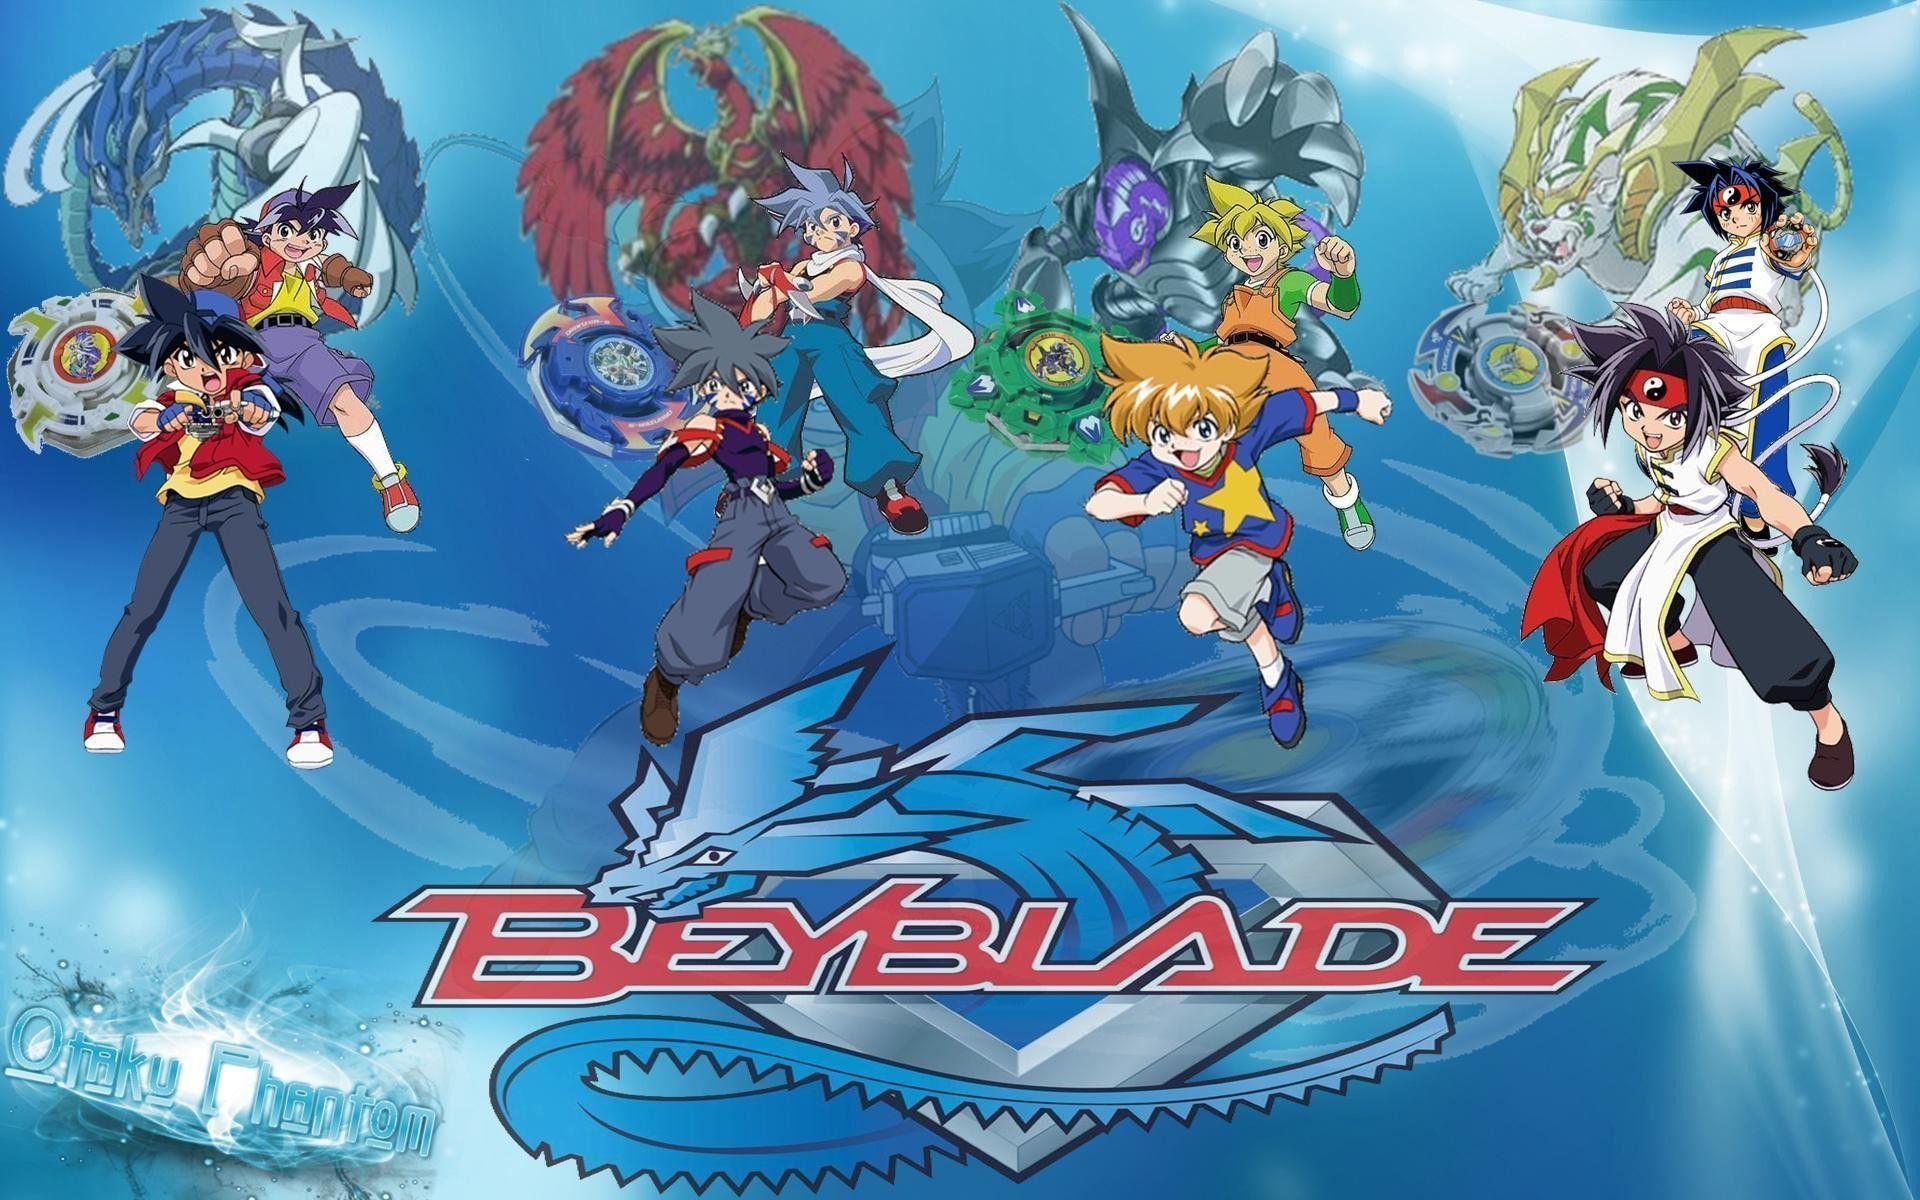 HD wallpaper, Beyblade G Revolution, Anime, Anime Boys, Blue Background